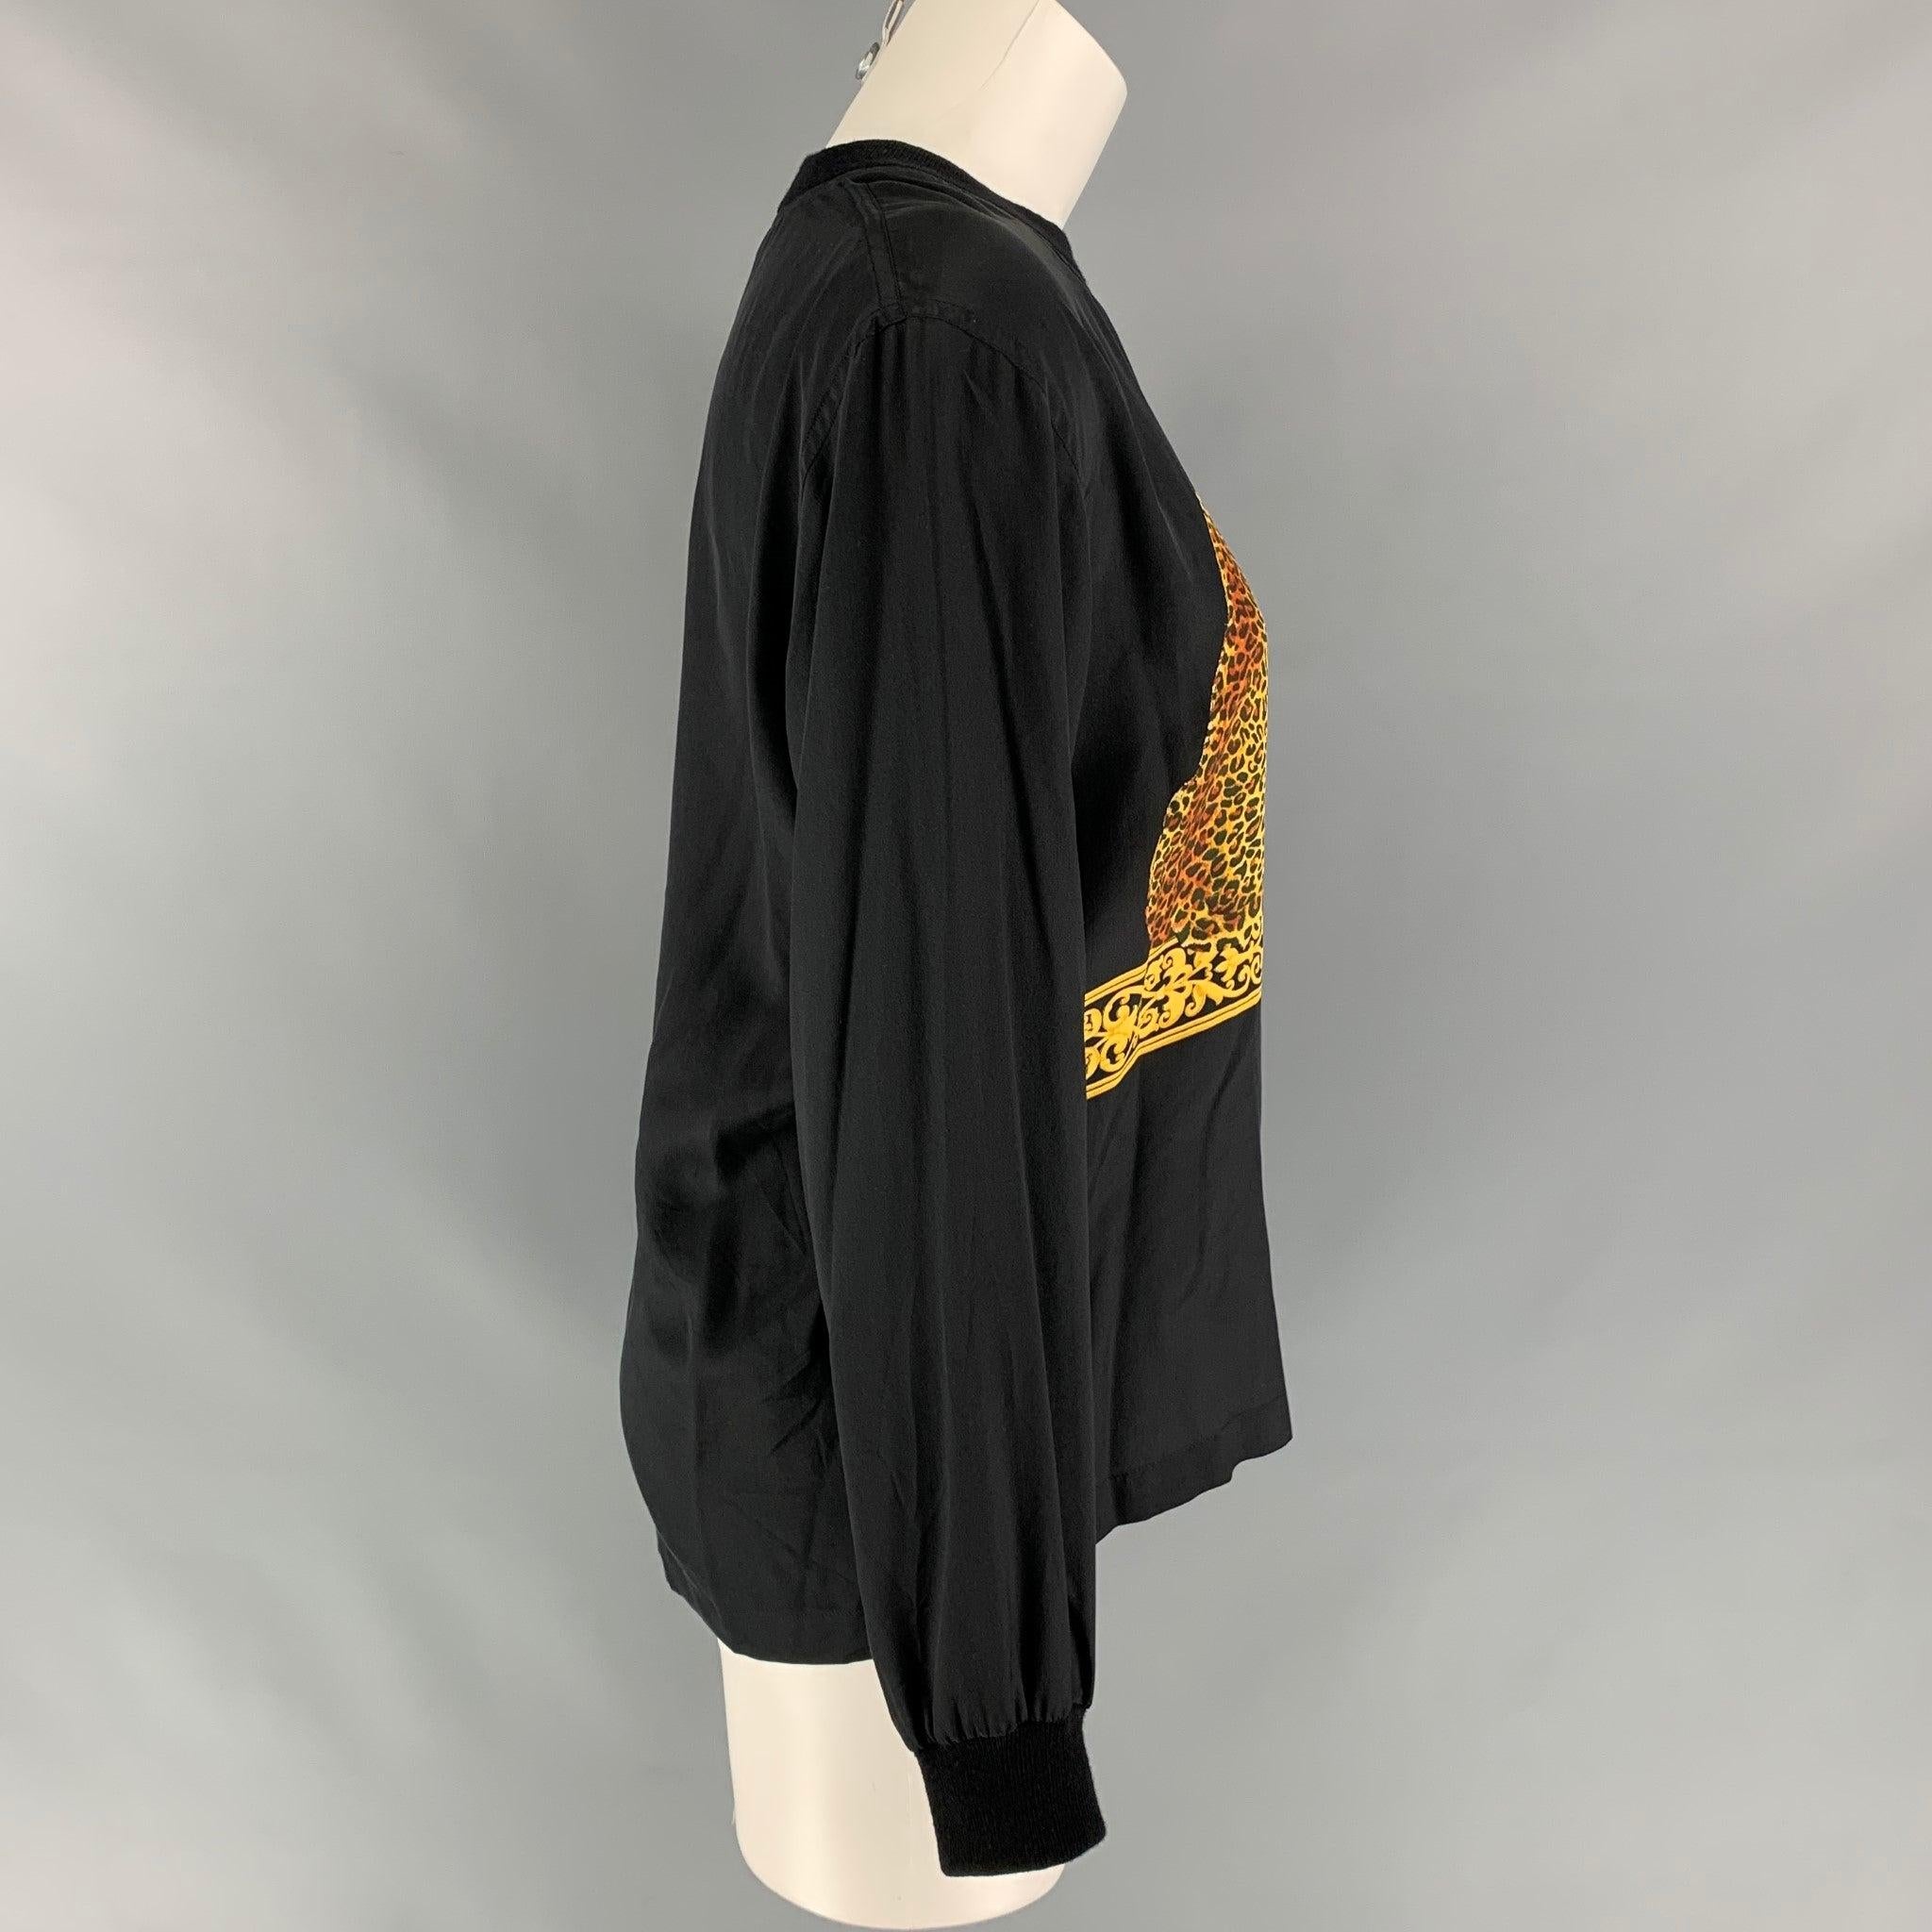 Vintage SALVATORE FERRAGAMO Size M Black & Beige Tiger Print Silk Blouse In Good Condition For Sale In San Francisco, CA